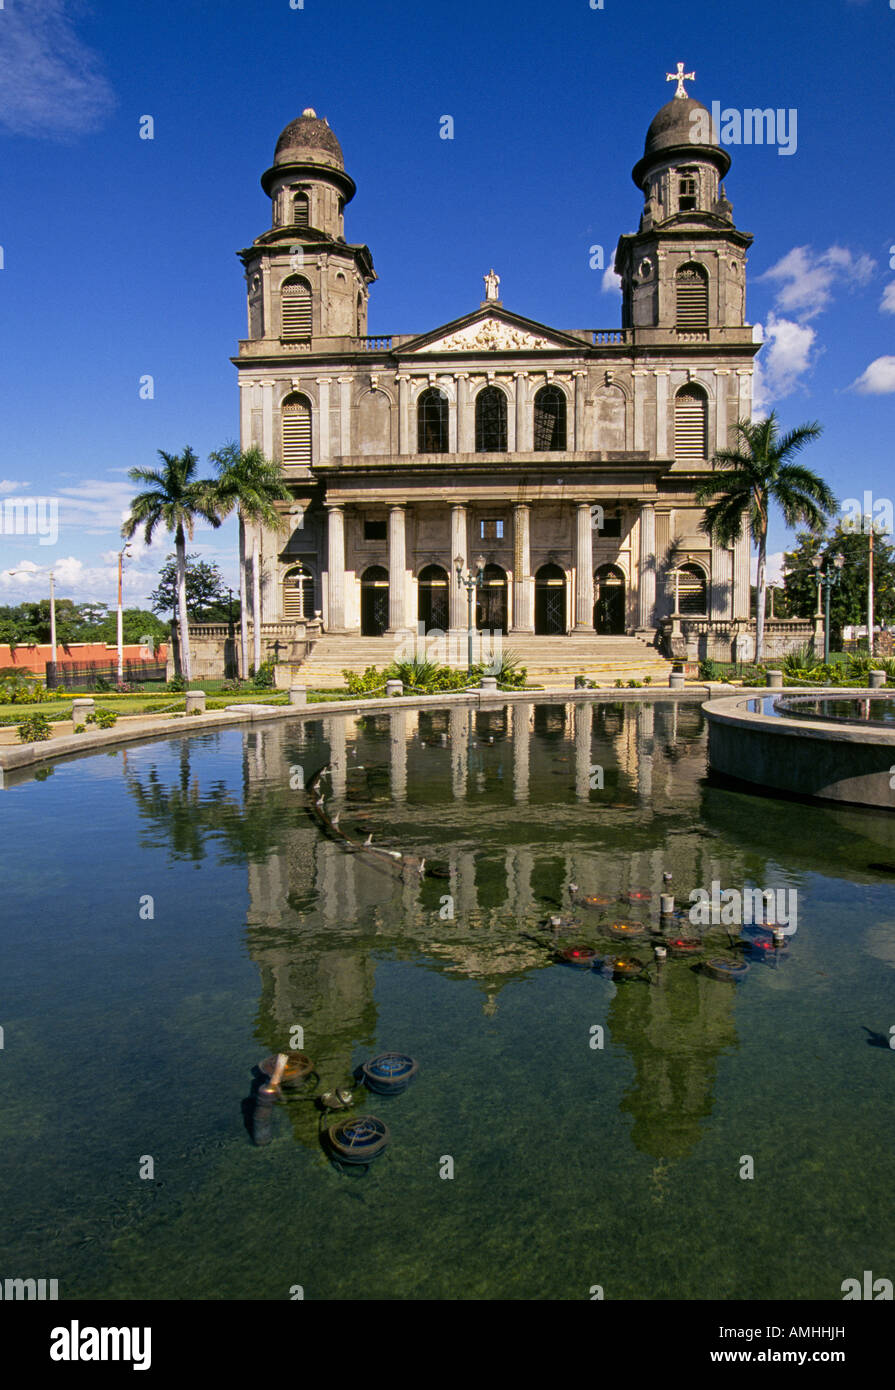 Centroamérica Nicaragua una vista de la histórica catedral católica a lo largo del Malecón de Managua, Nicaragua Foto de stock